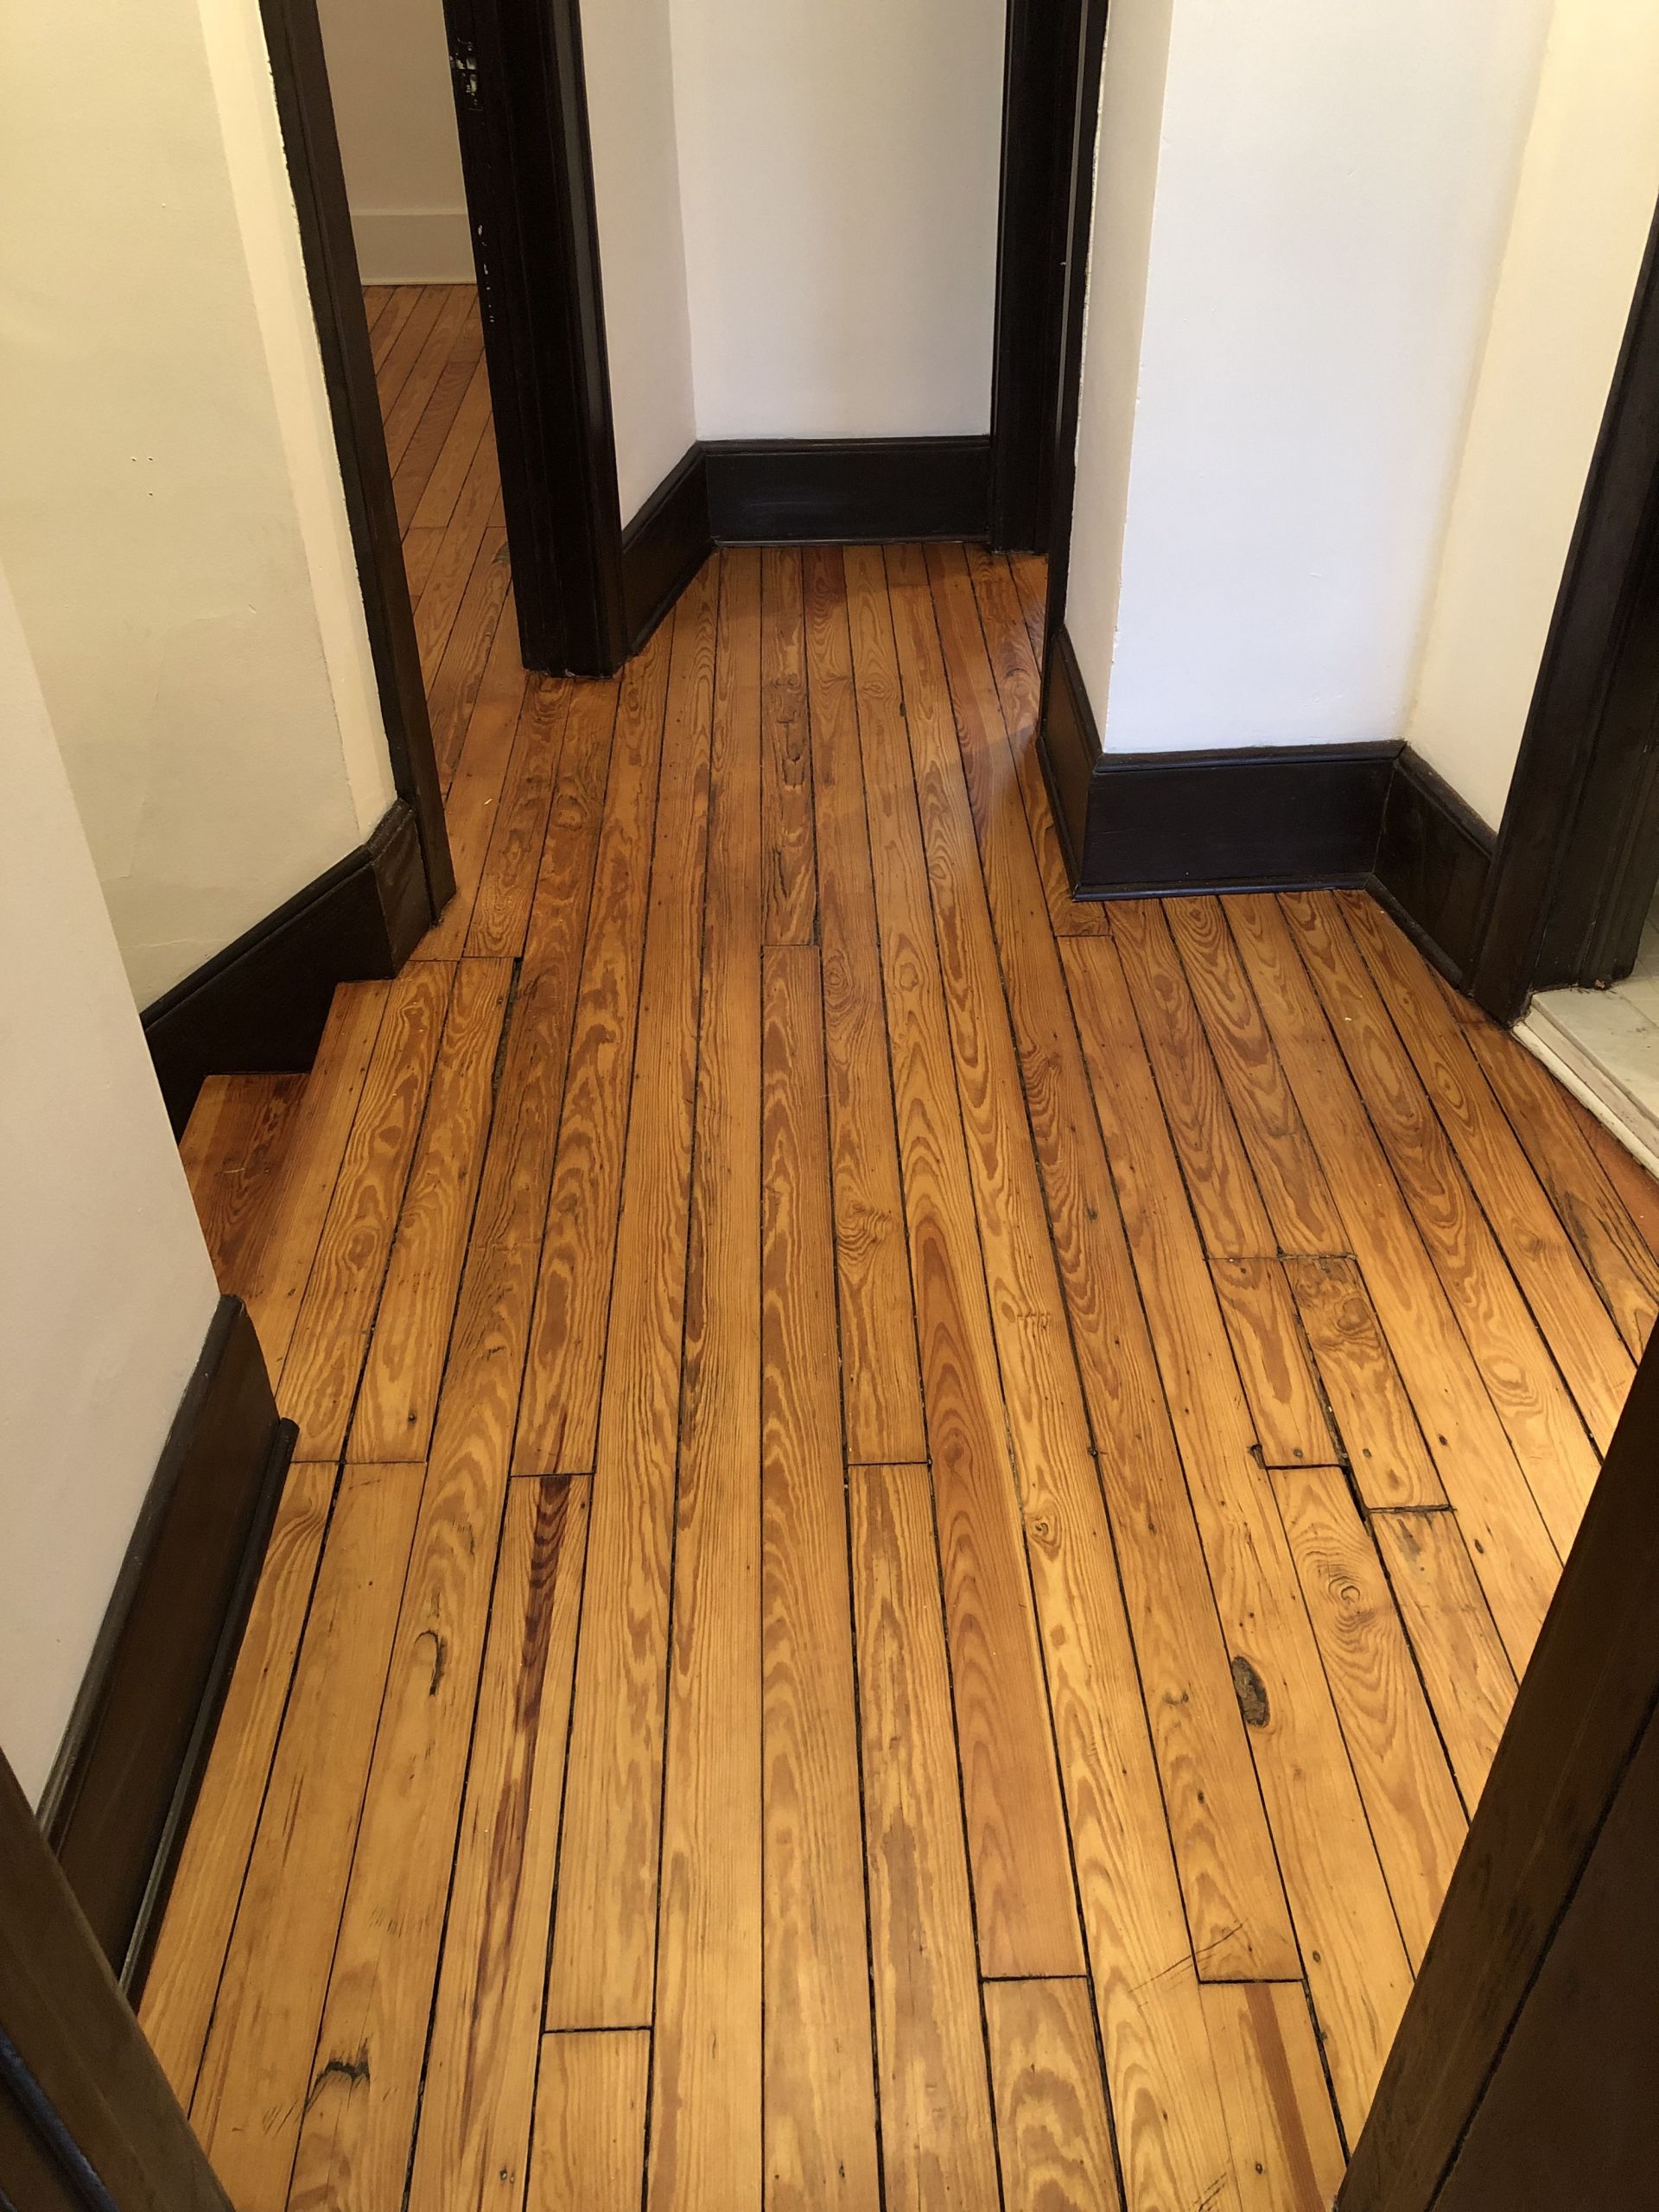 Refinishing Wood Floors DIY
 HOW TO REFINISH HARDWOOD FLOORS Step by Step Do It